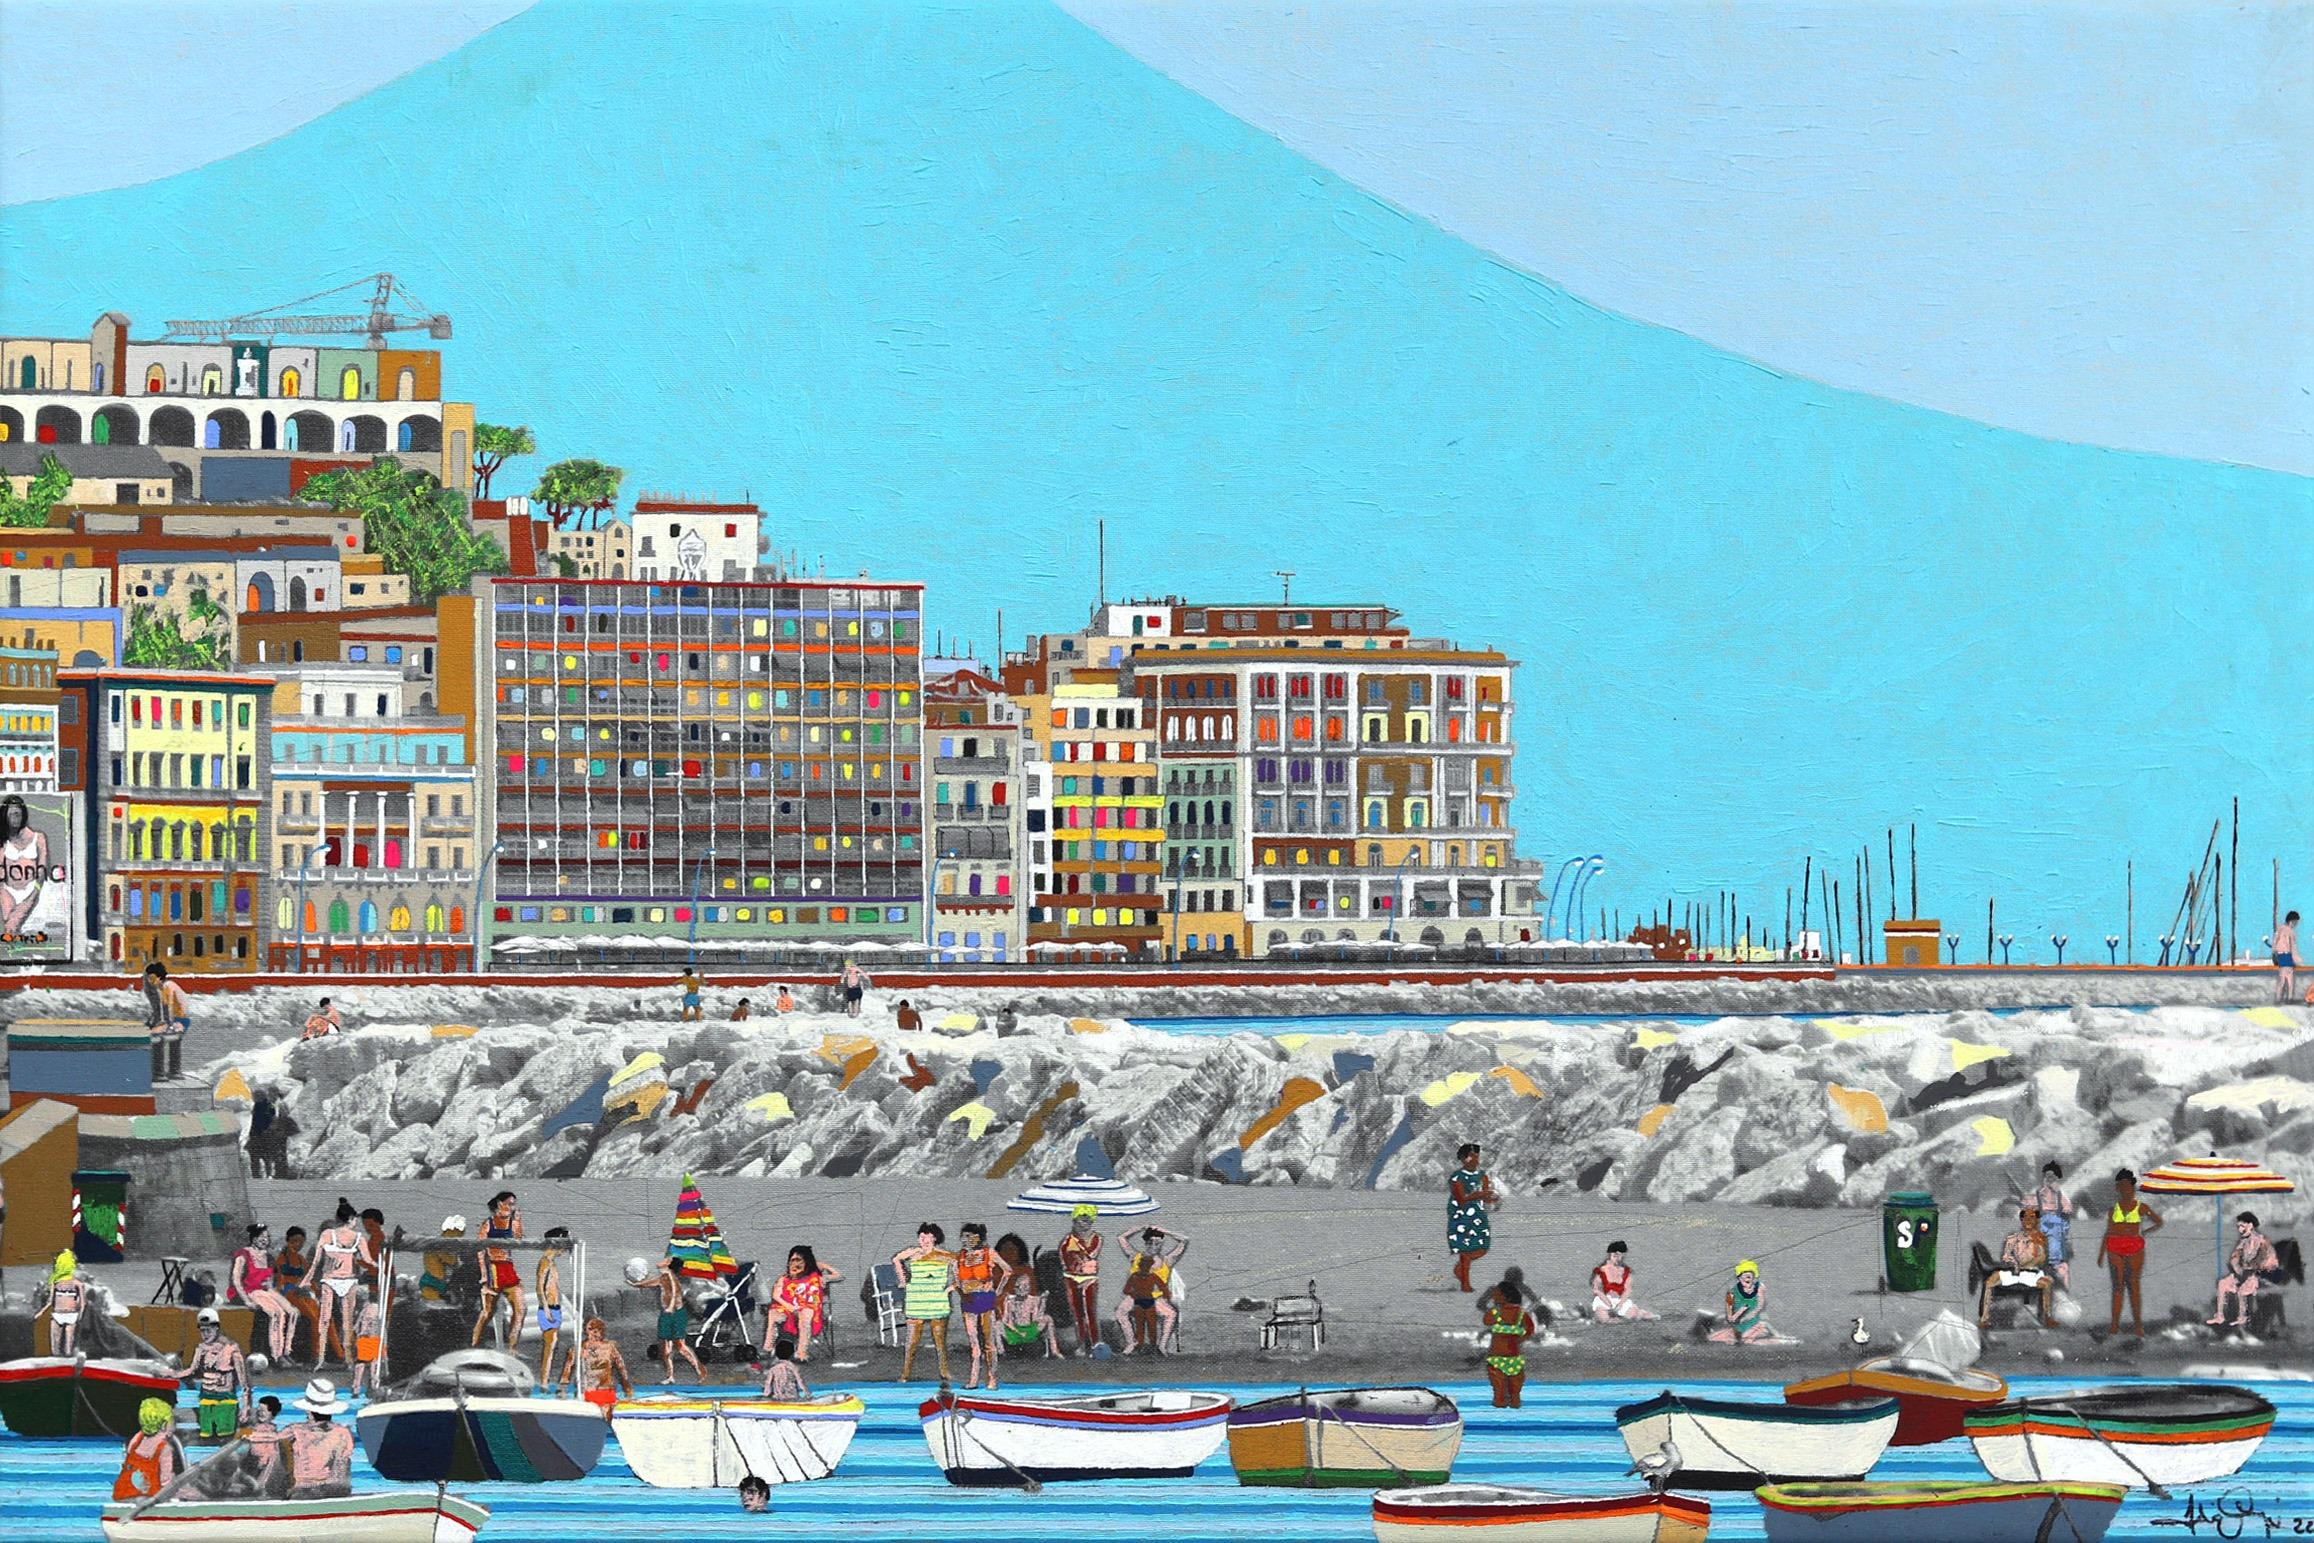 Napoli - Original Landscape Colorful Authentic Italian Beach City Painting - Mixed Media Art by Fabio Coruzzi